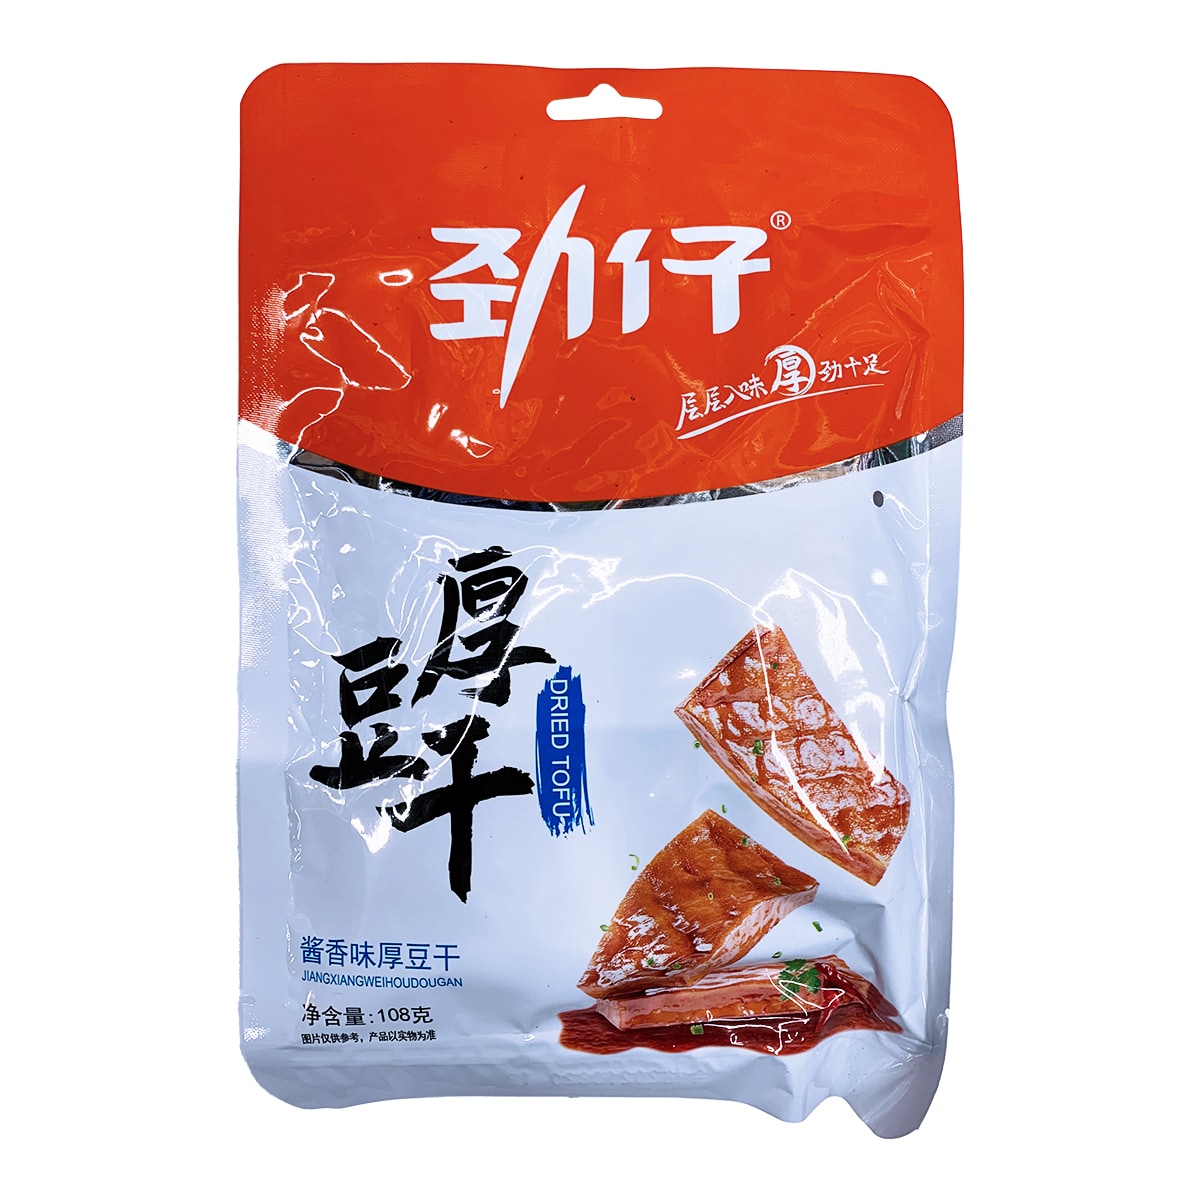 劲仔 酱香厚豆干 Dried tofu Jiangxiang flavor 108g